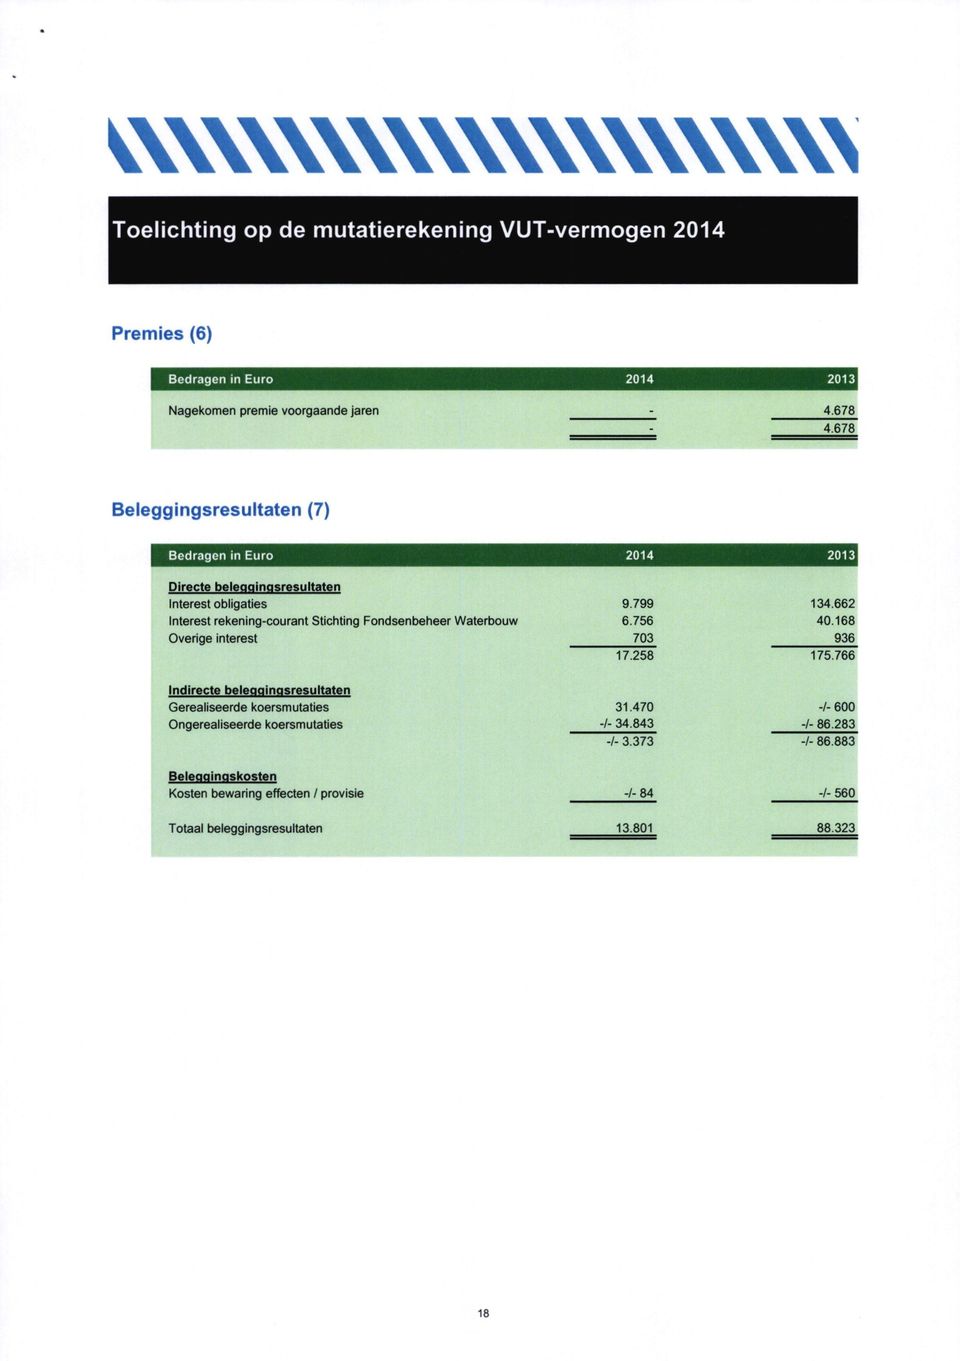 662 Interest rekening-courant Stichting Fondsenbeheer Waterbouw 6.756 40.168 Overige interest 703 936 17.258 175.